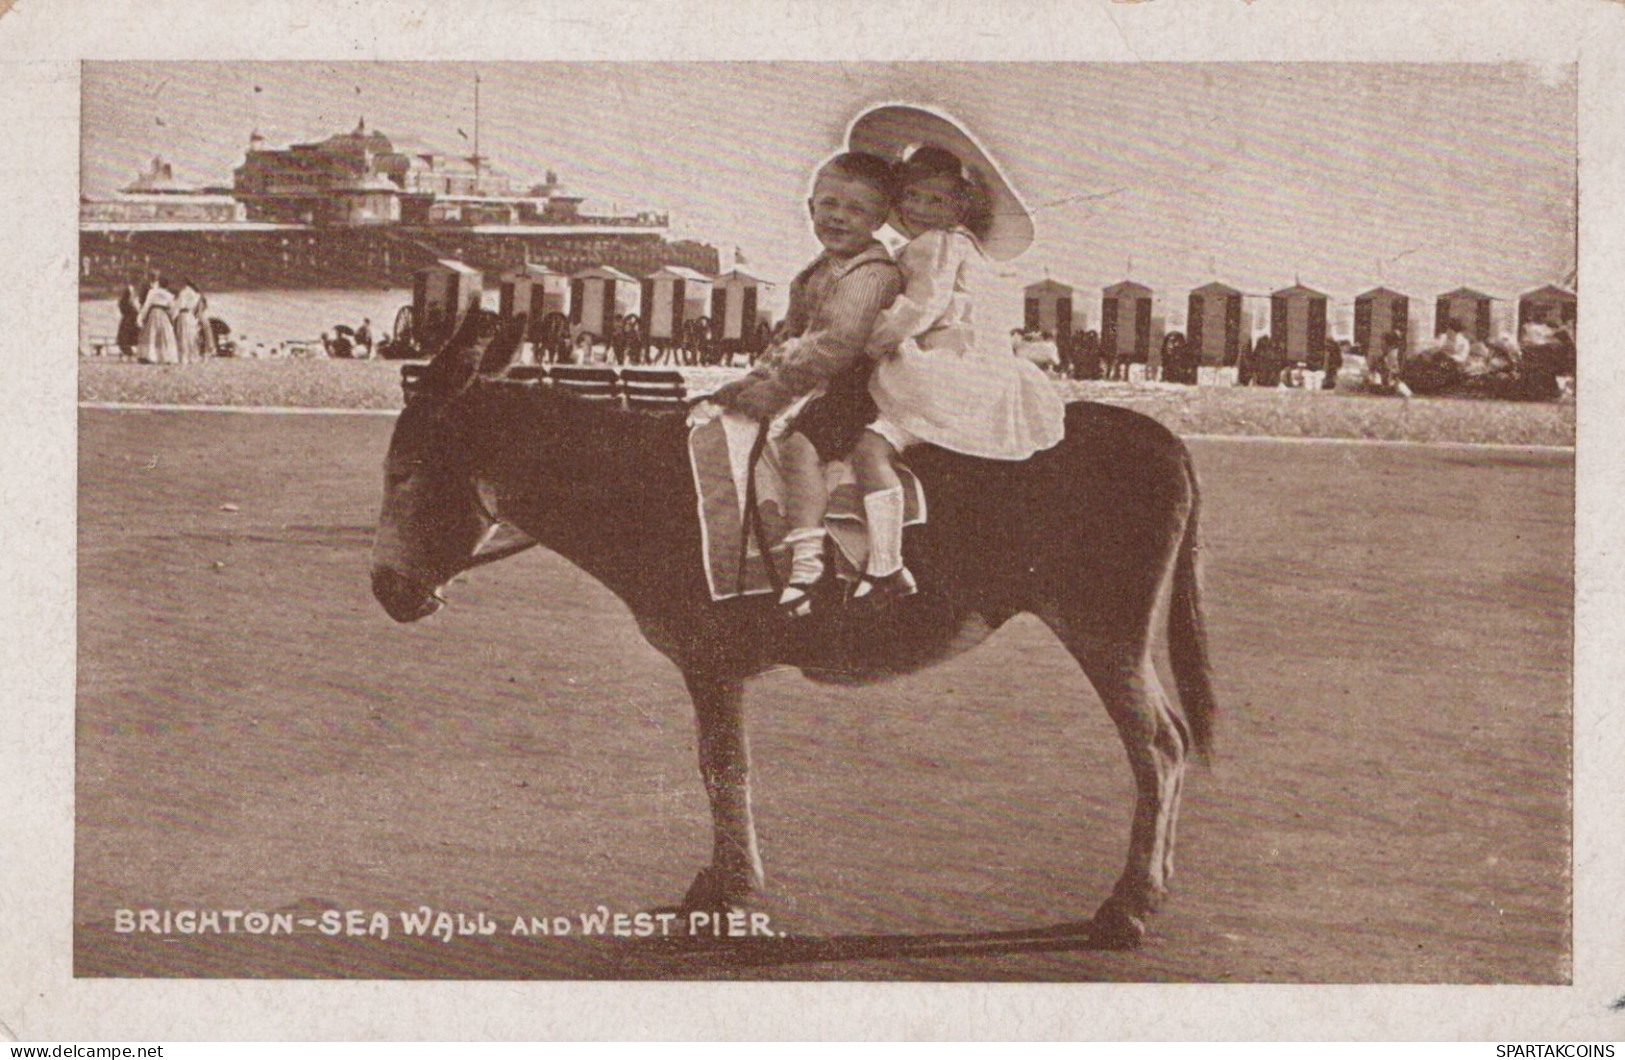 ESEL Tiere Kinder Vintage Antik Alt CPA Ansichtskarte Postkarte #PAA347.A - Donkeys